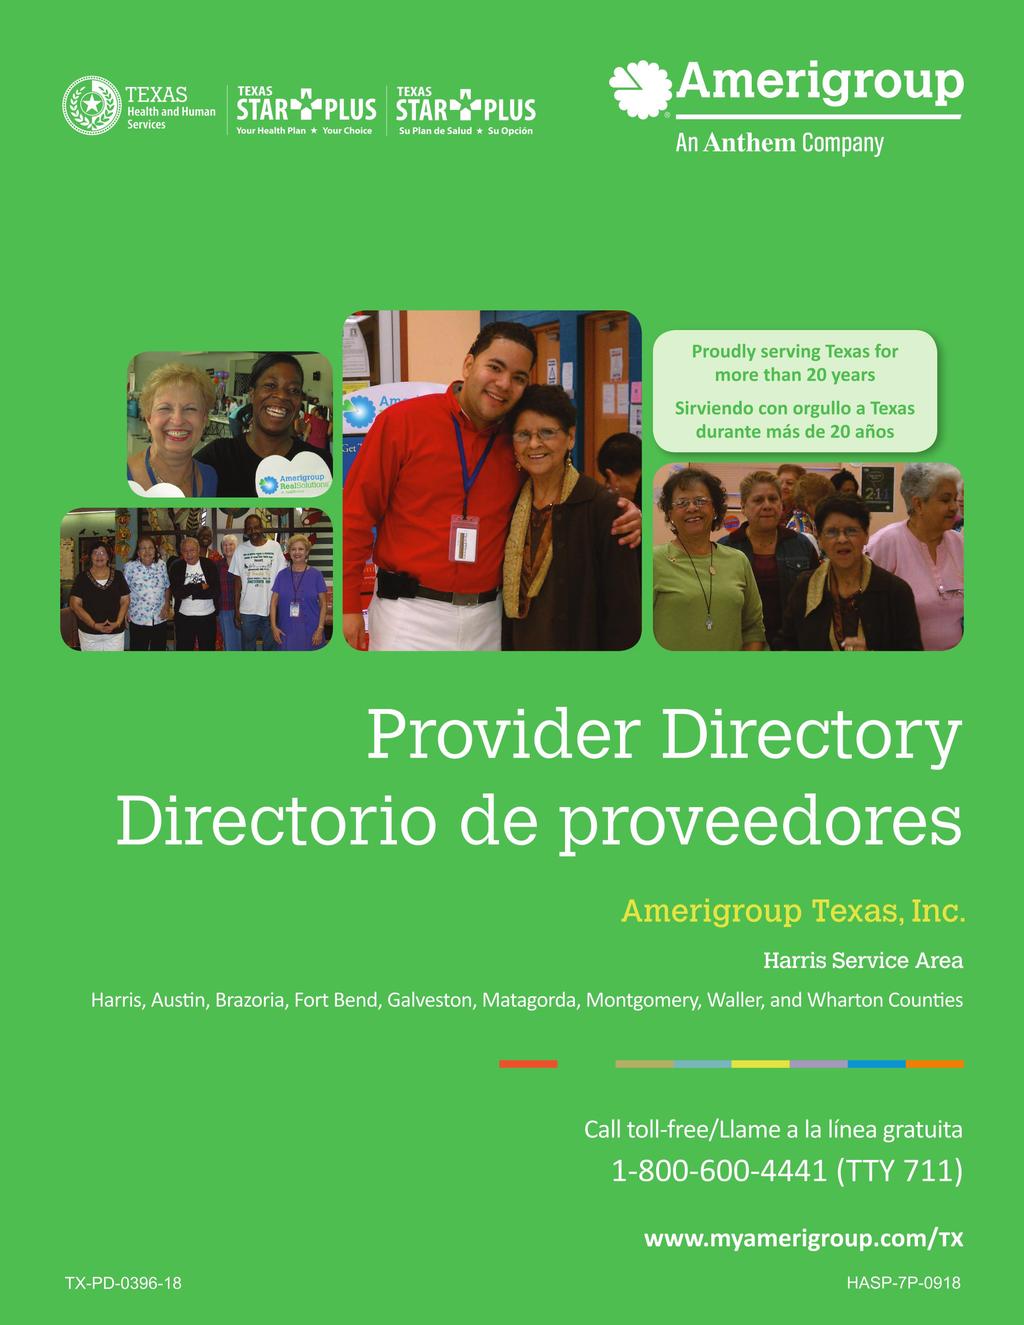 amerigroup company directory